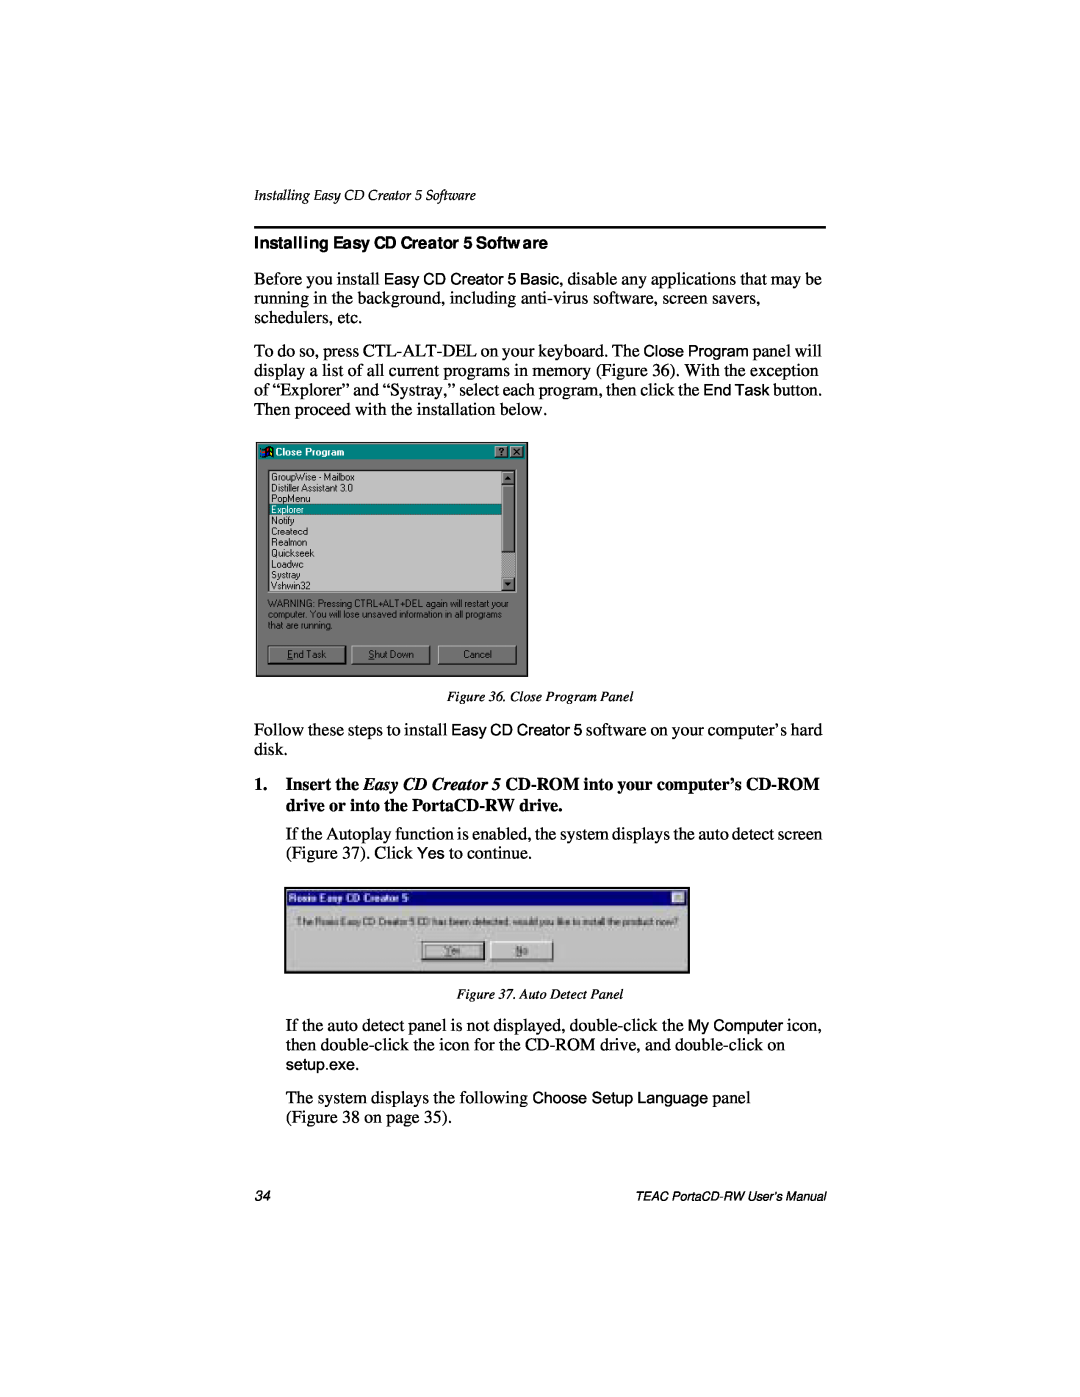 Teac E24E user manual Installing Easy CD Creator 5 Software, Close Program Panel, Auto Detect Panel 